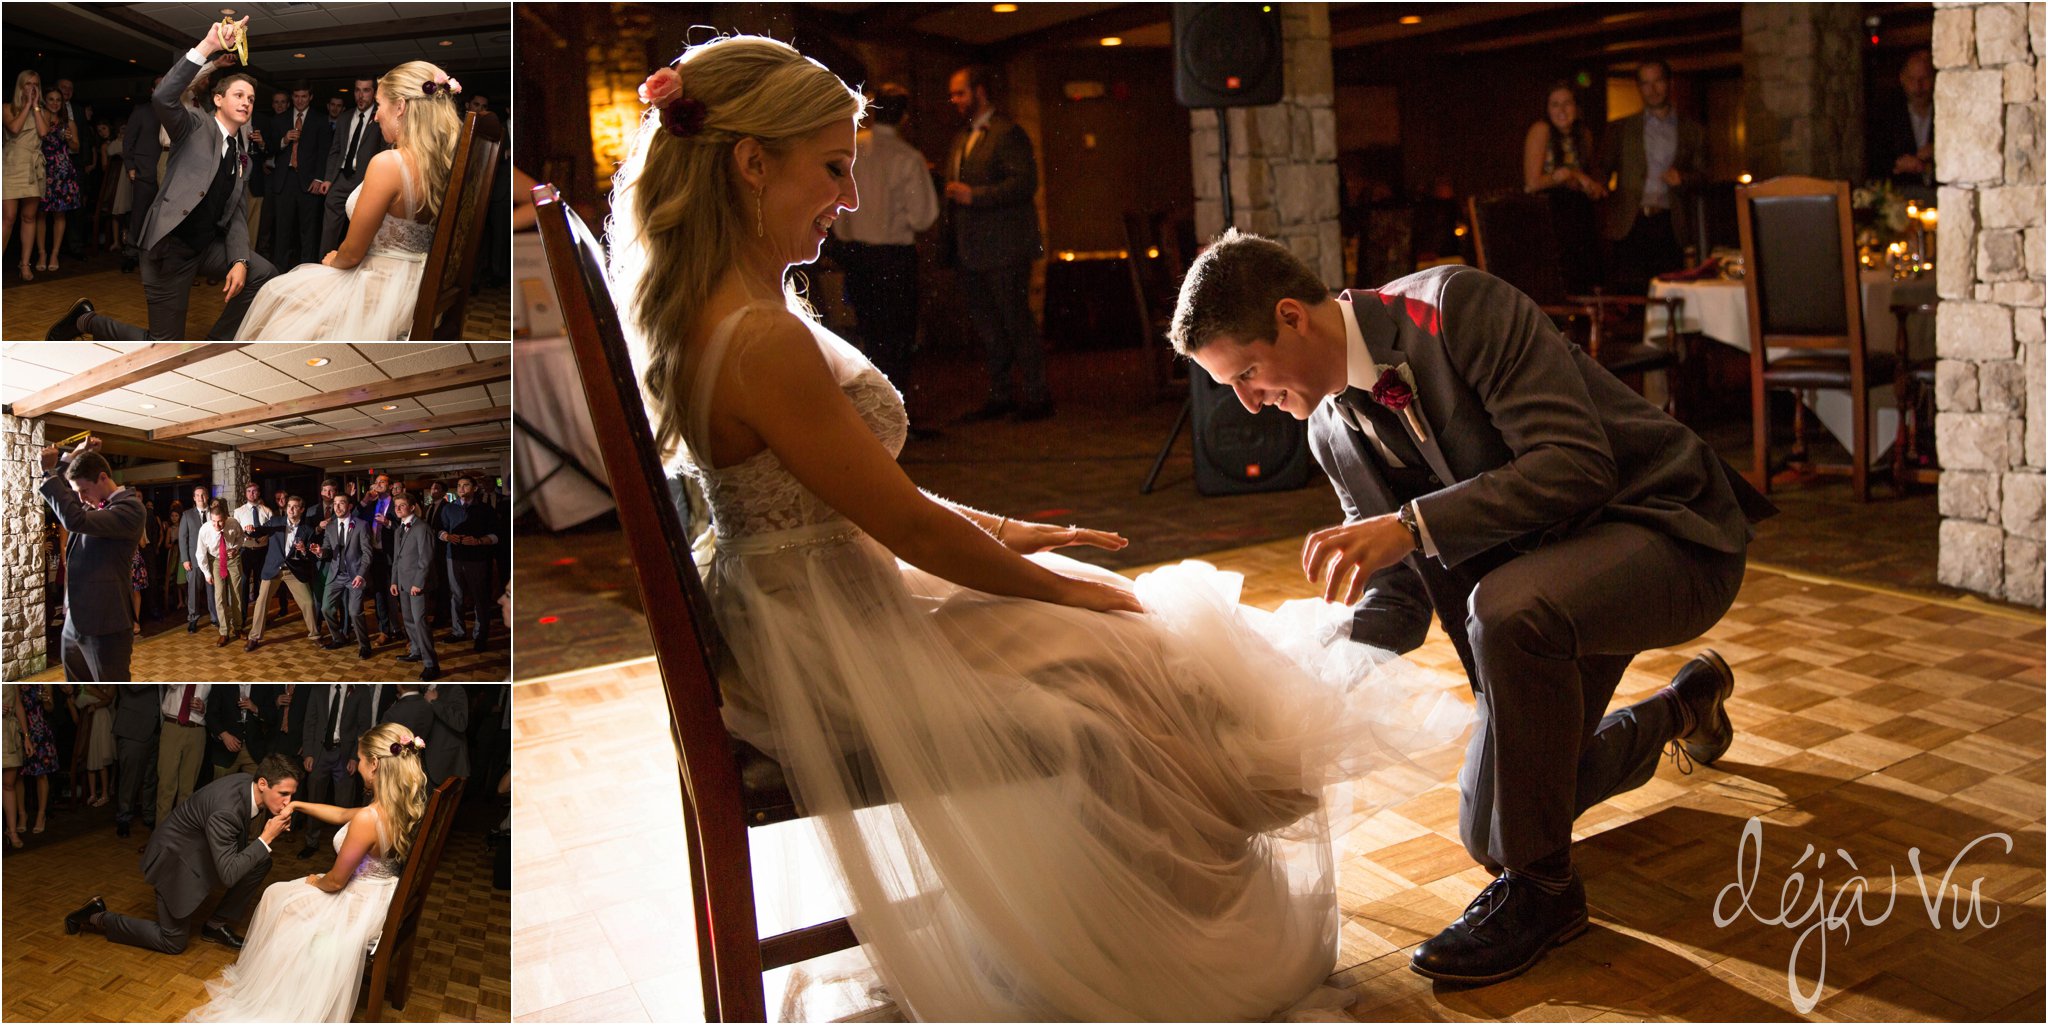 Shadow Glen Country Club Wedding | garter toss | Images by: www.feliciathephotographer.com